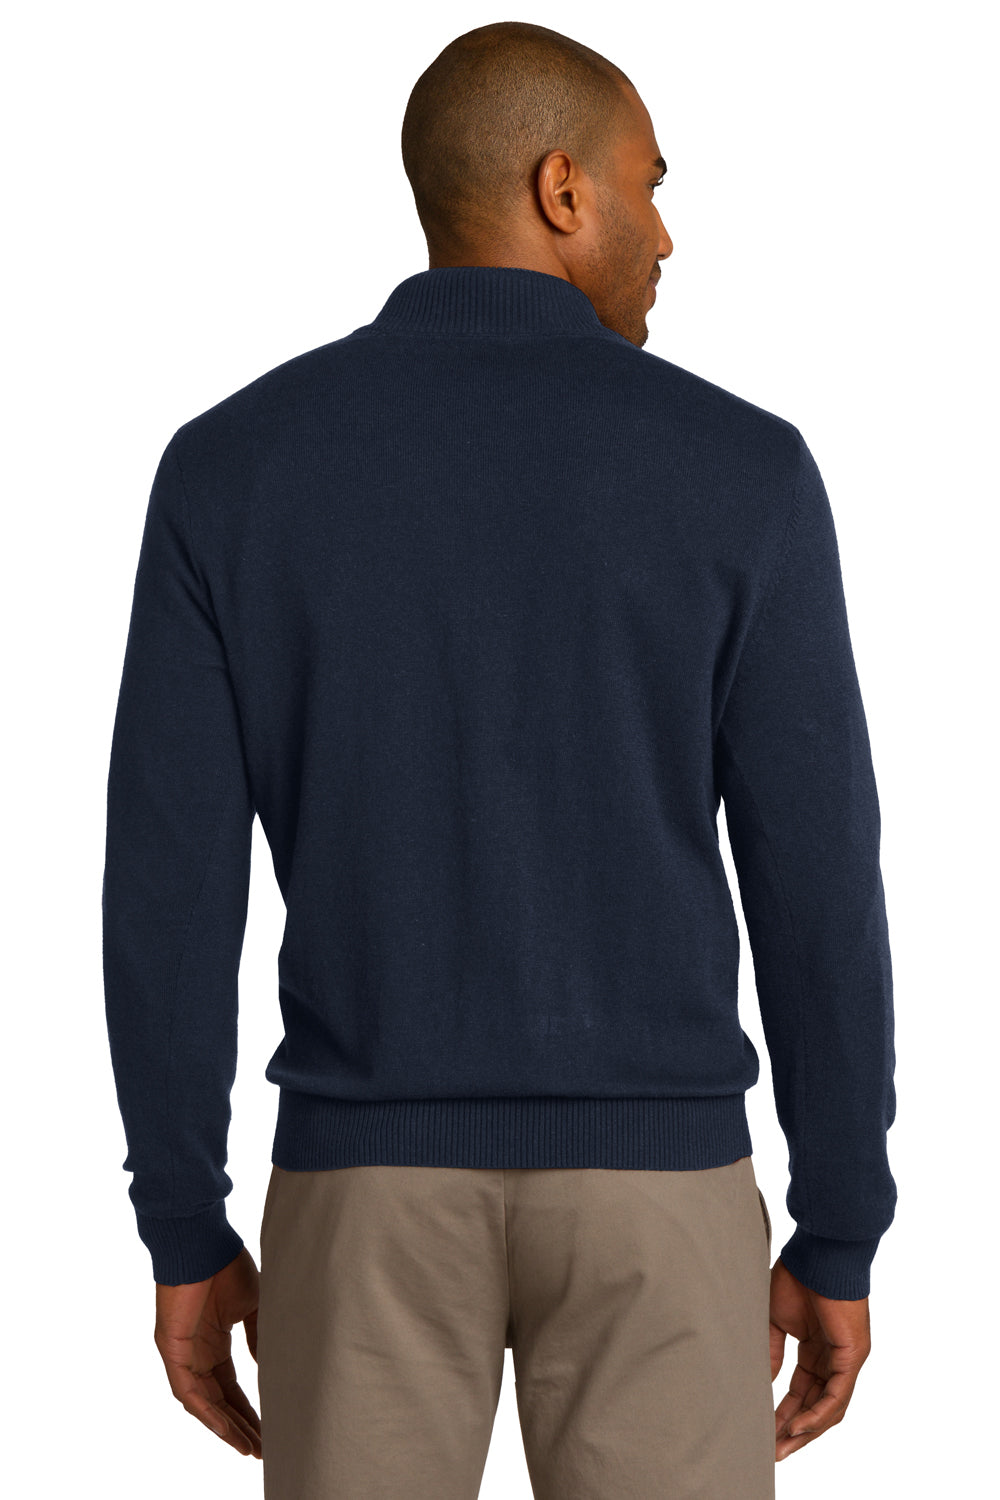 Port Authority SW290 Mens Long Sleeve 1/4 Zip Sweater Navy Blue Back